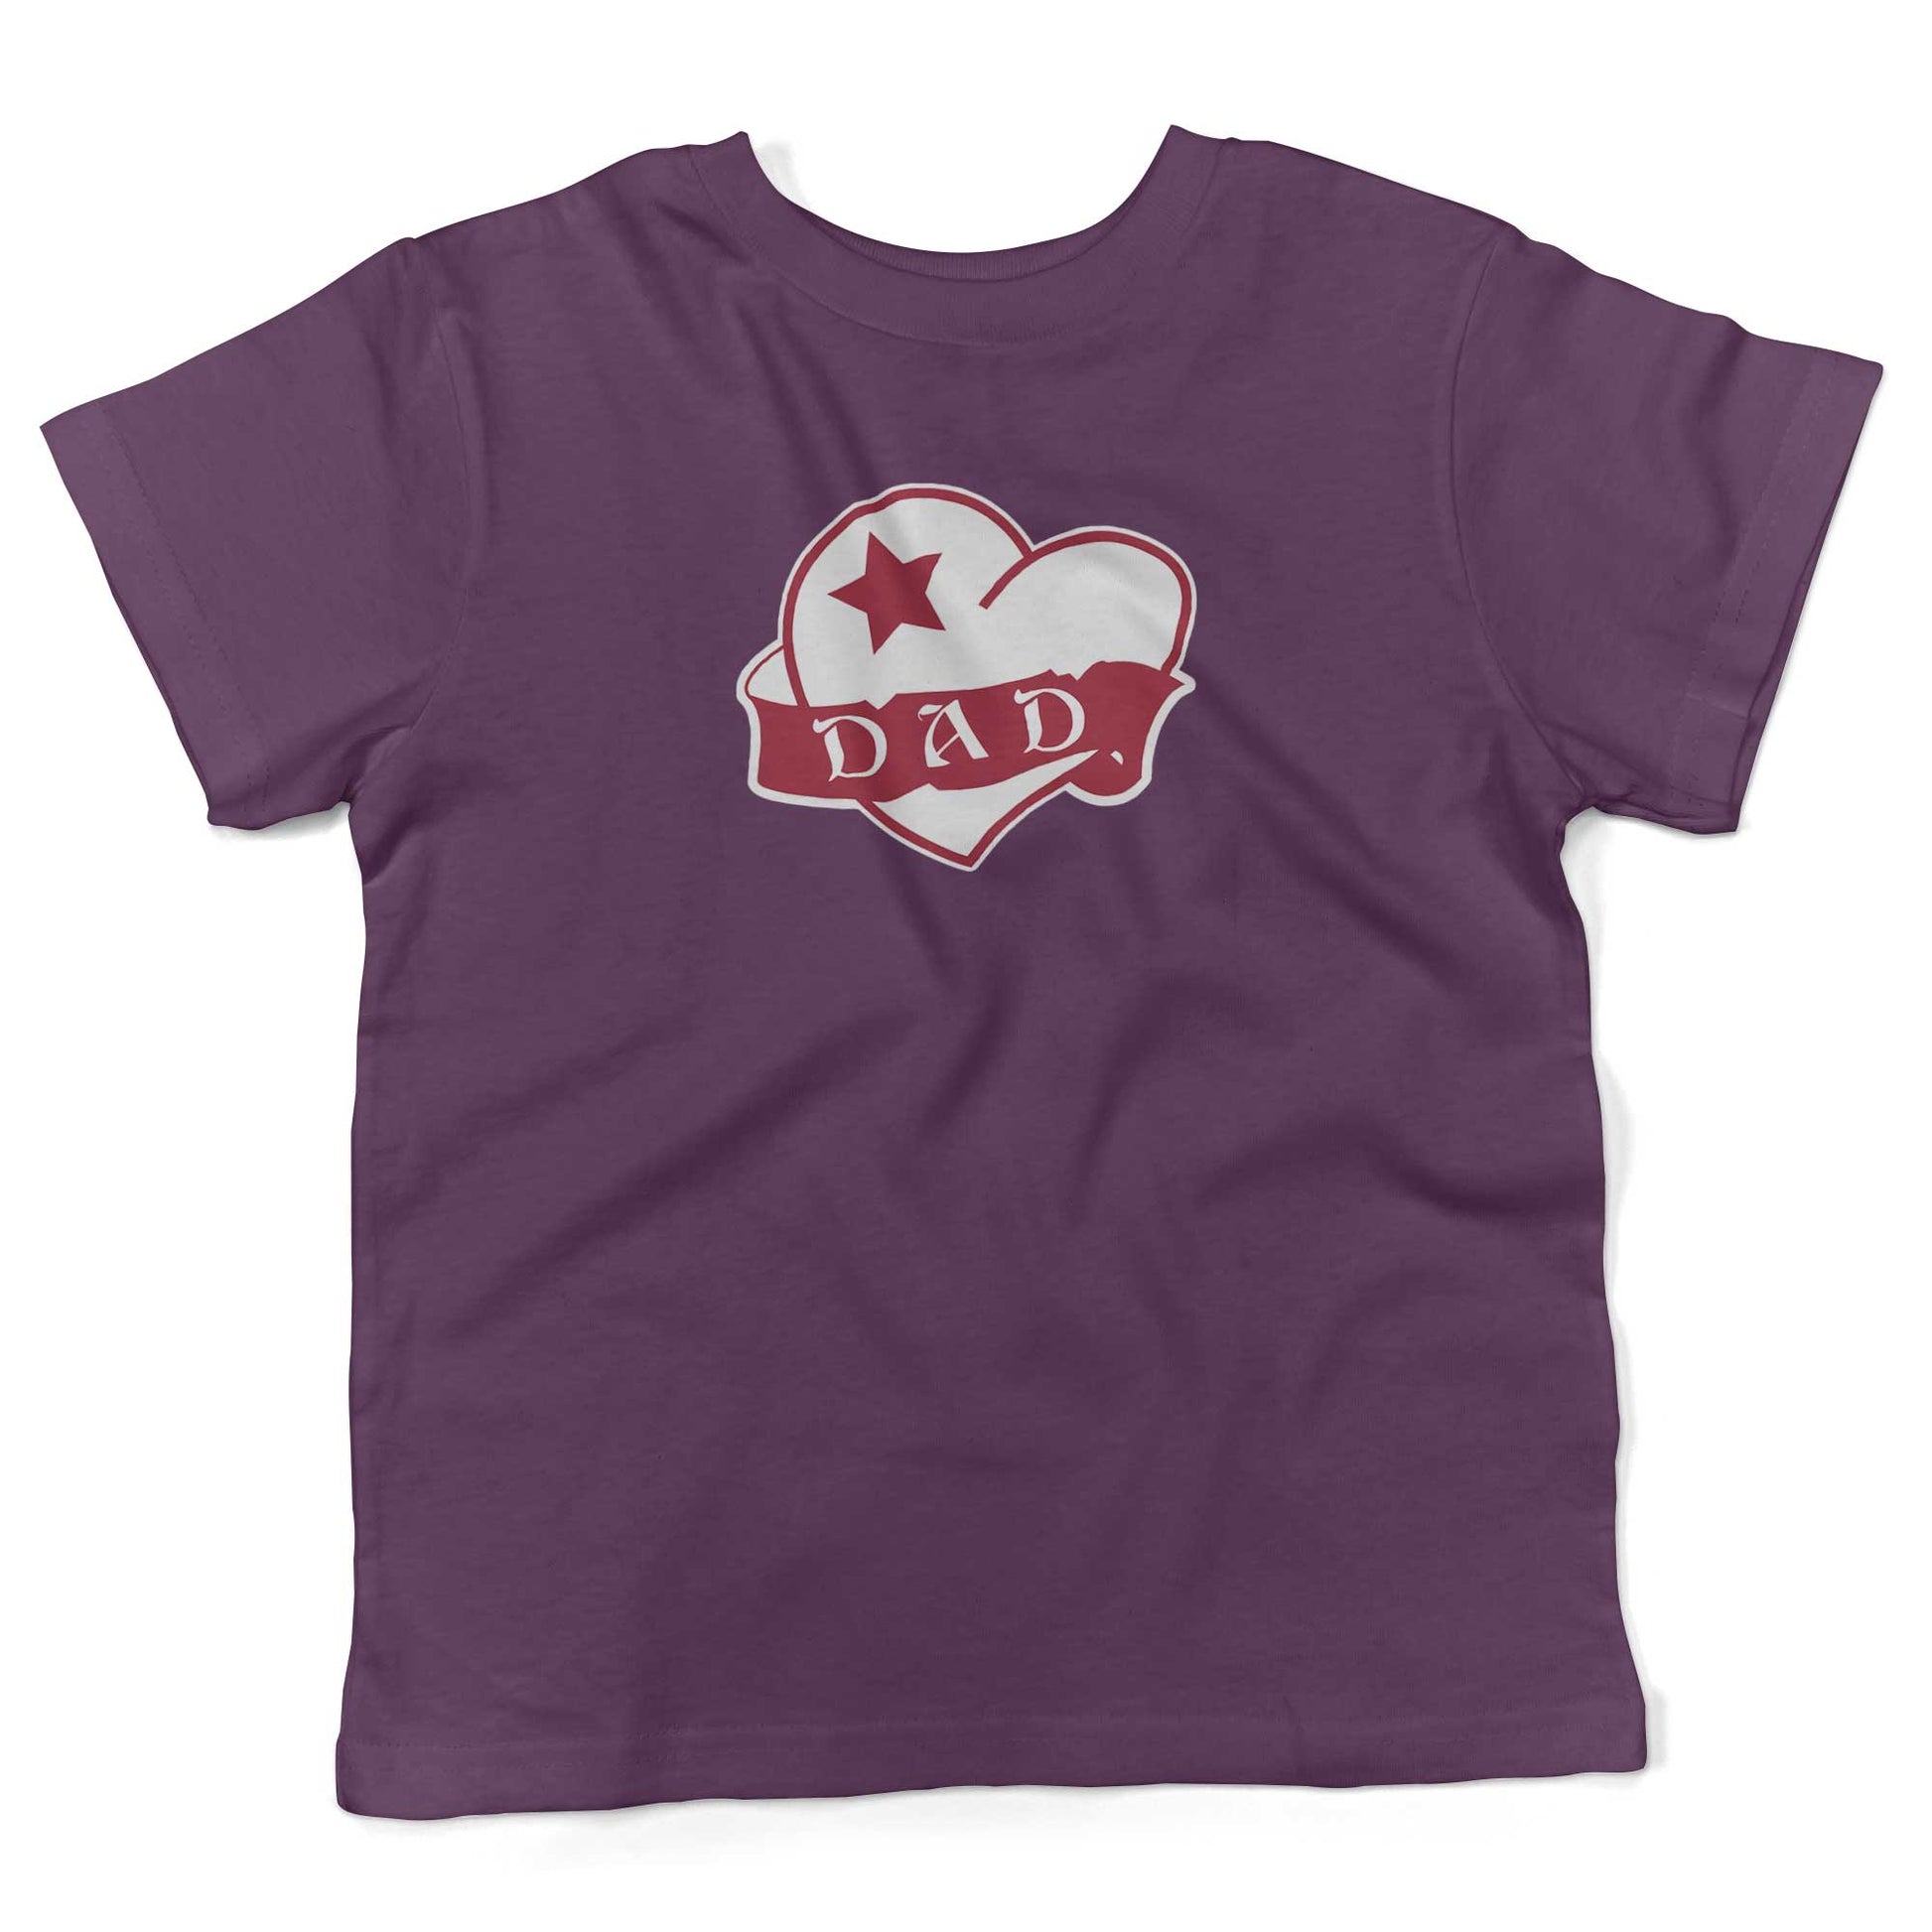 Dad Tattoo Heart Toddler Shirt-Organic Purple-2T